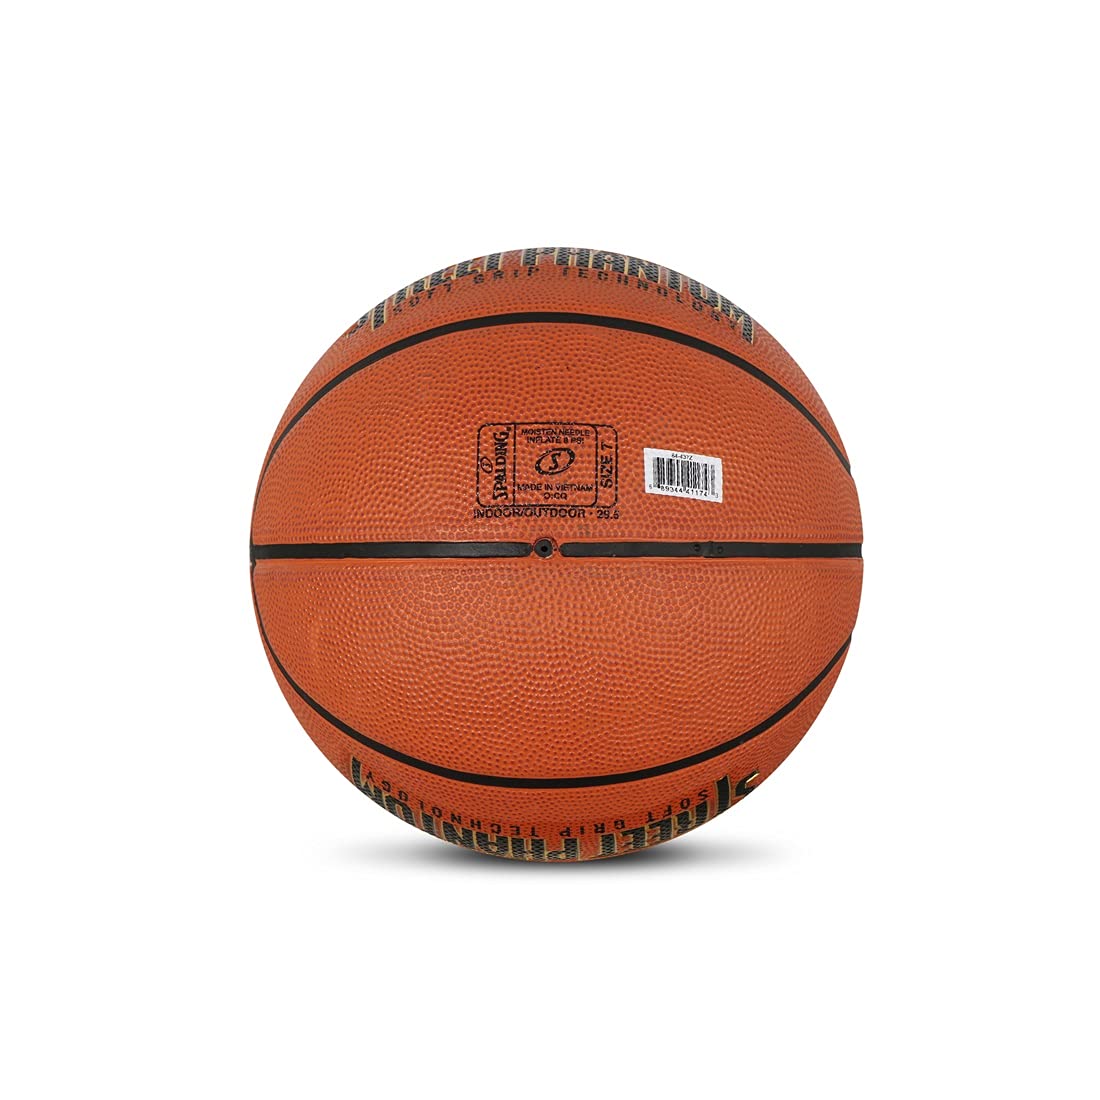 Spalding Street Phantom Rubber Basketball, Size 7 (Orange/Black) - Best Price online Prokicksports.com